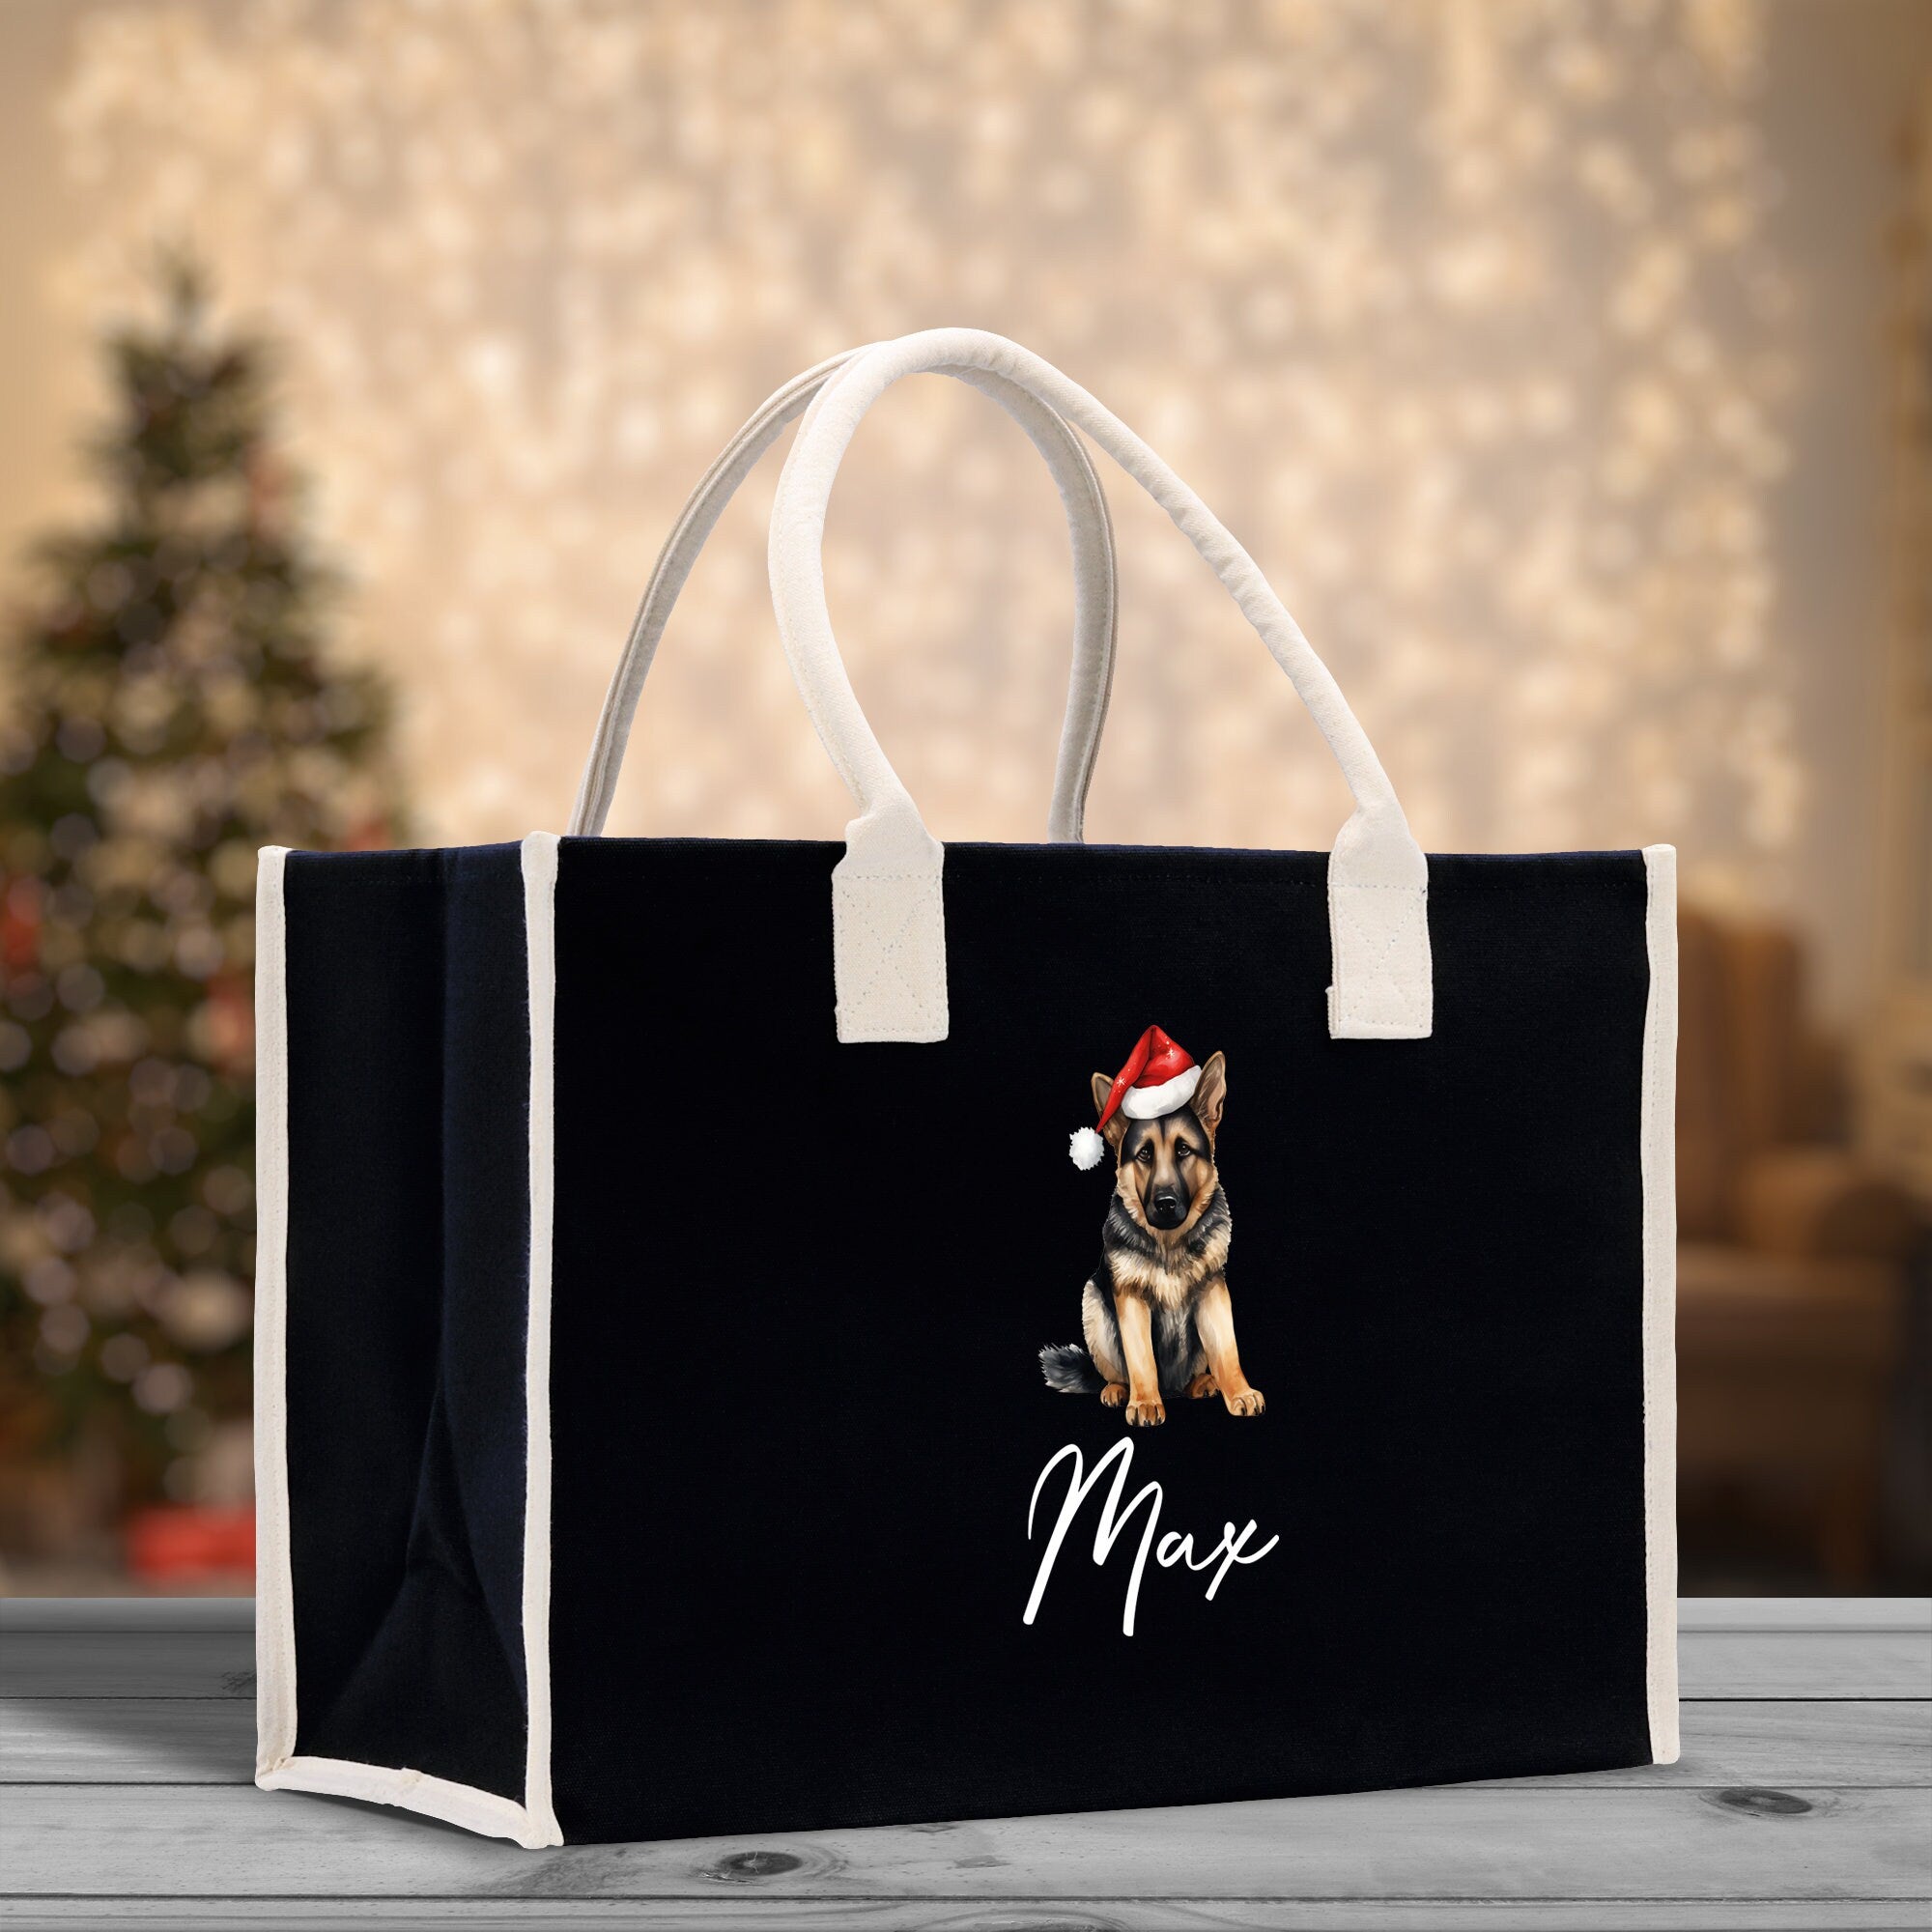 a black shopping bag with a german shepard dog wearing a santa hat